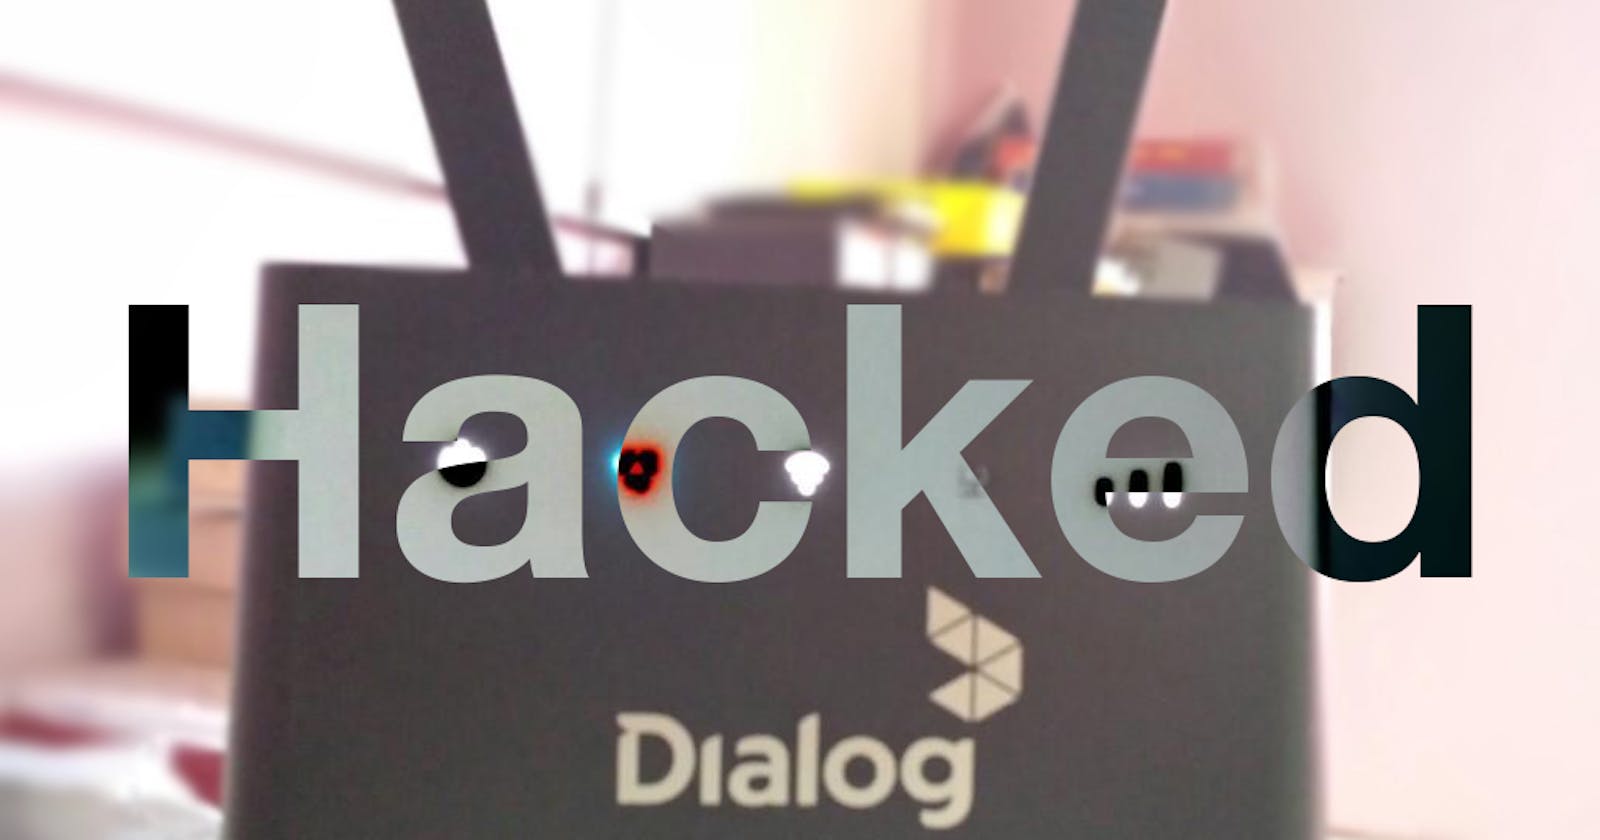 How I "Hacked" Dialog Axiata’s Self-Care App